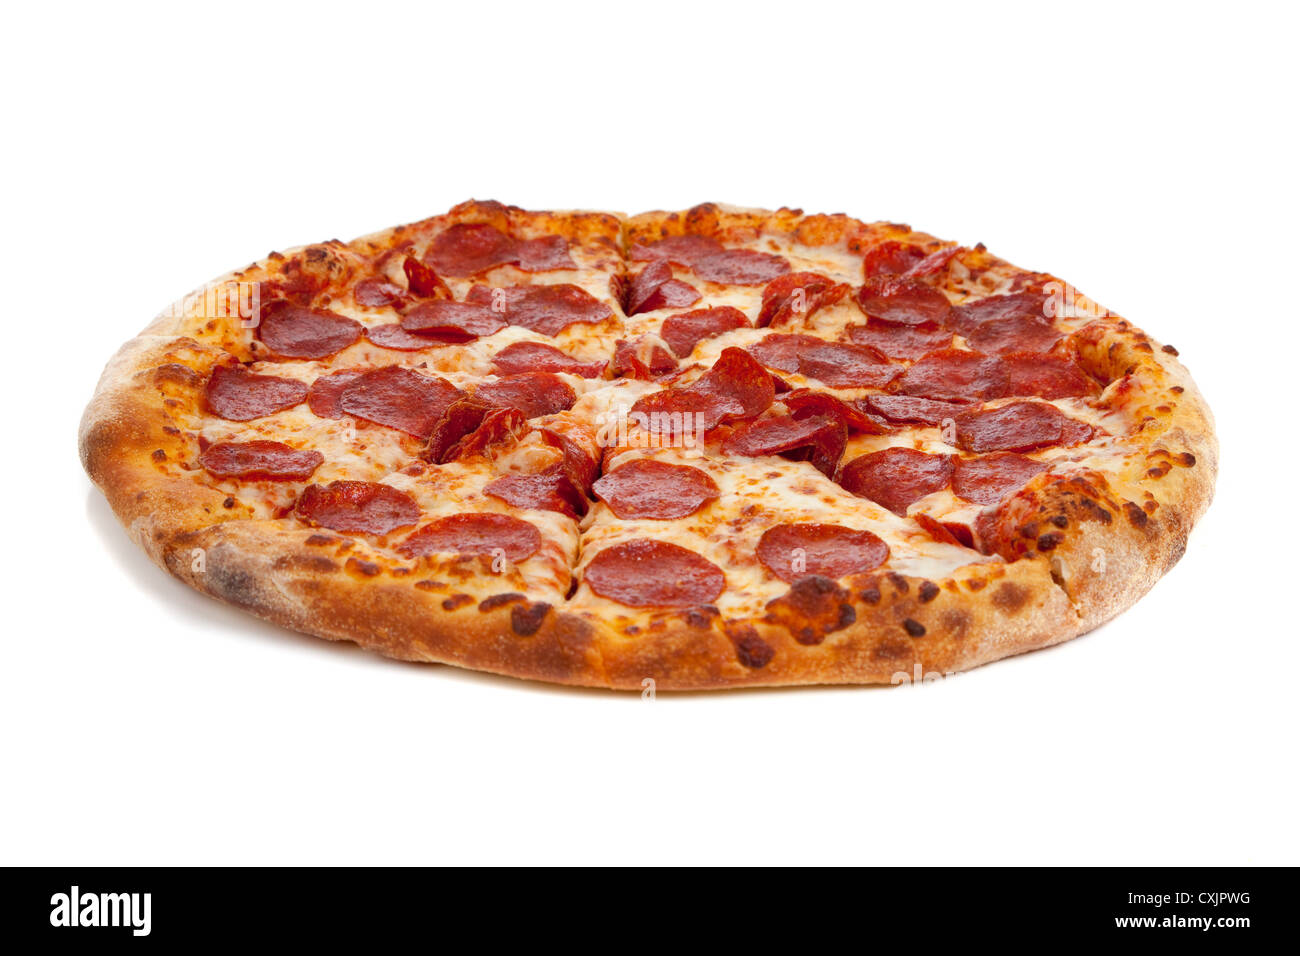 Pepperoni pizza on a white background Stock Photo